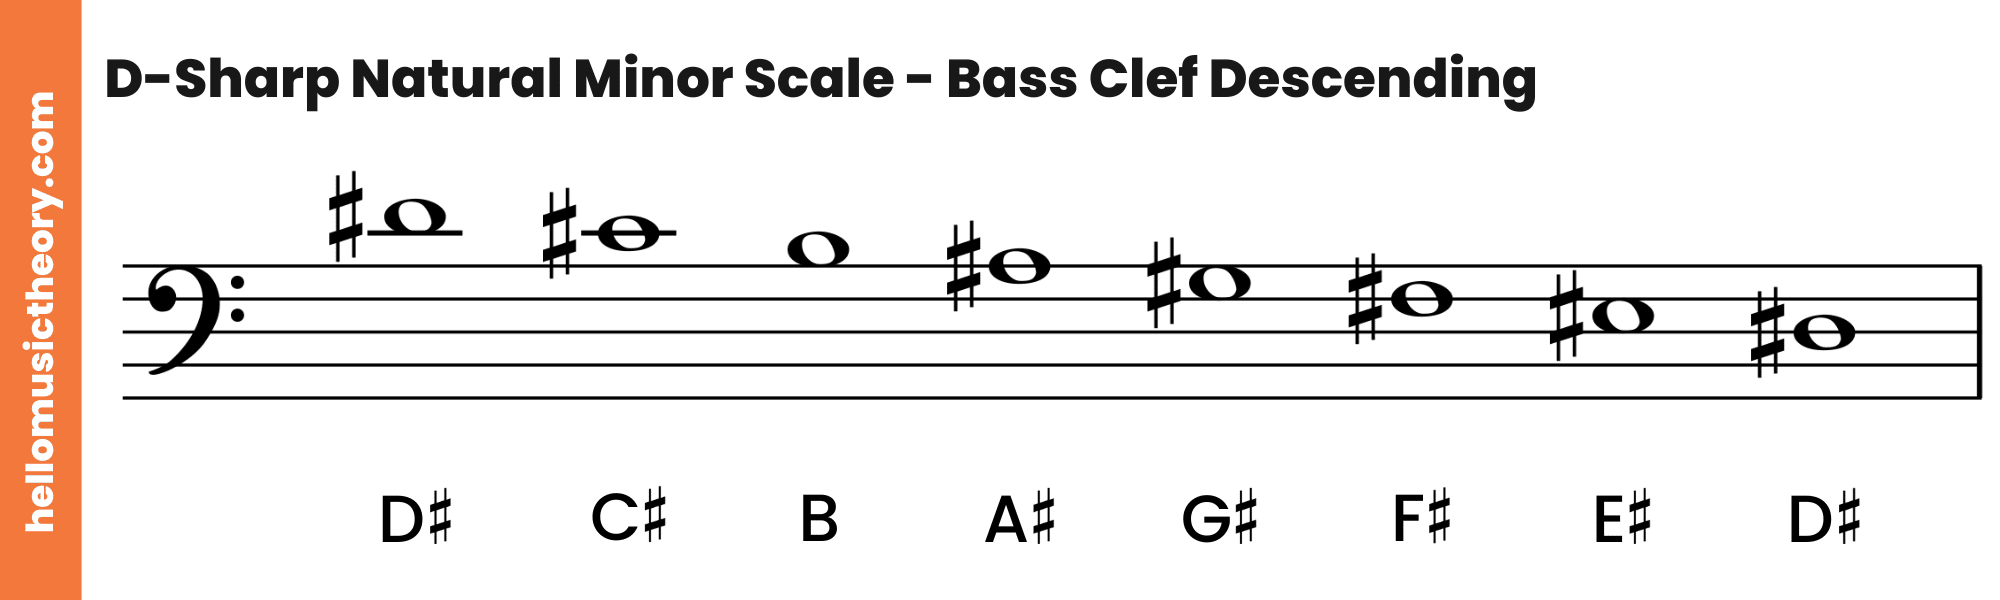 D-Sharp Natural Minor Scale Bass Clef Descending